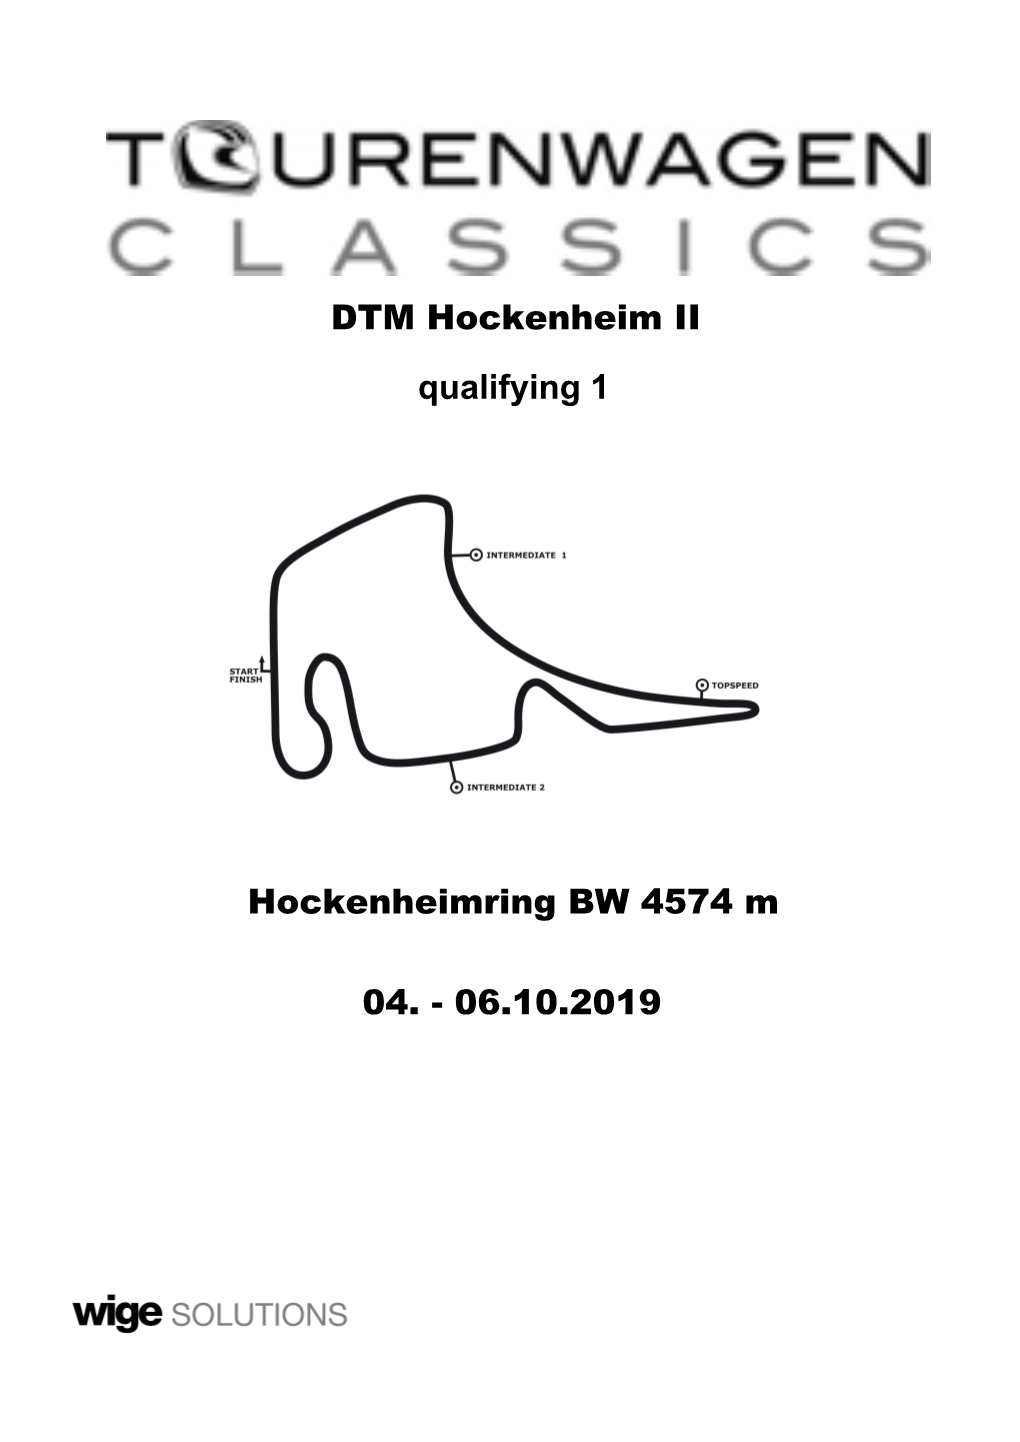 DTM Hockenheim II Hockenheimring BW 4574 M